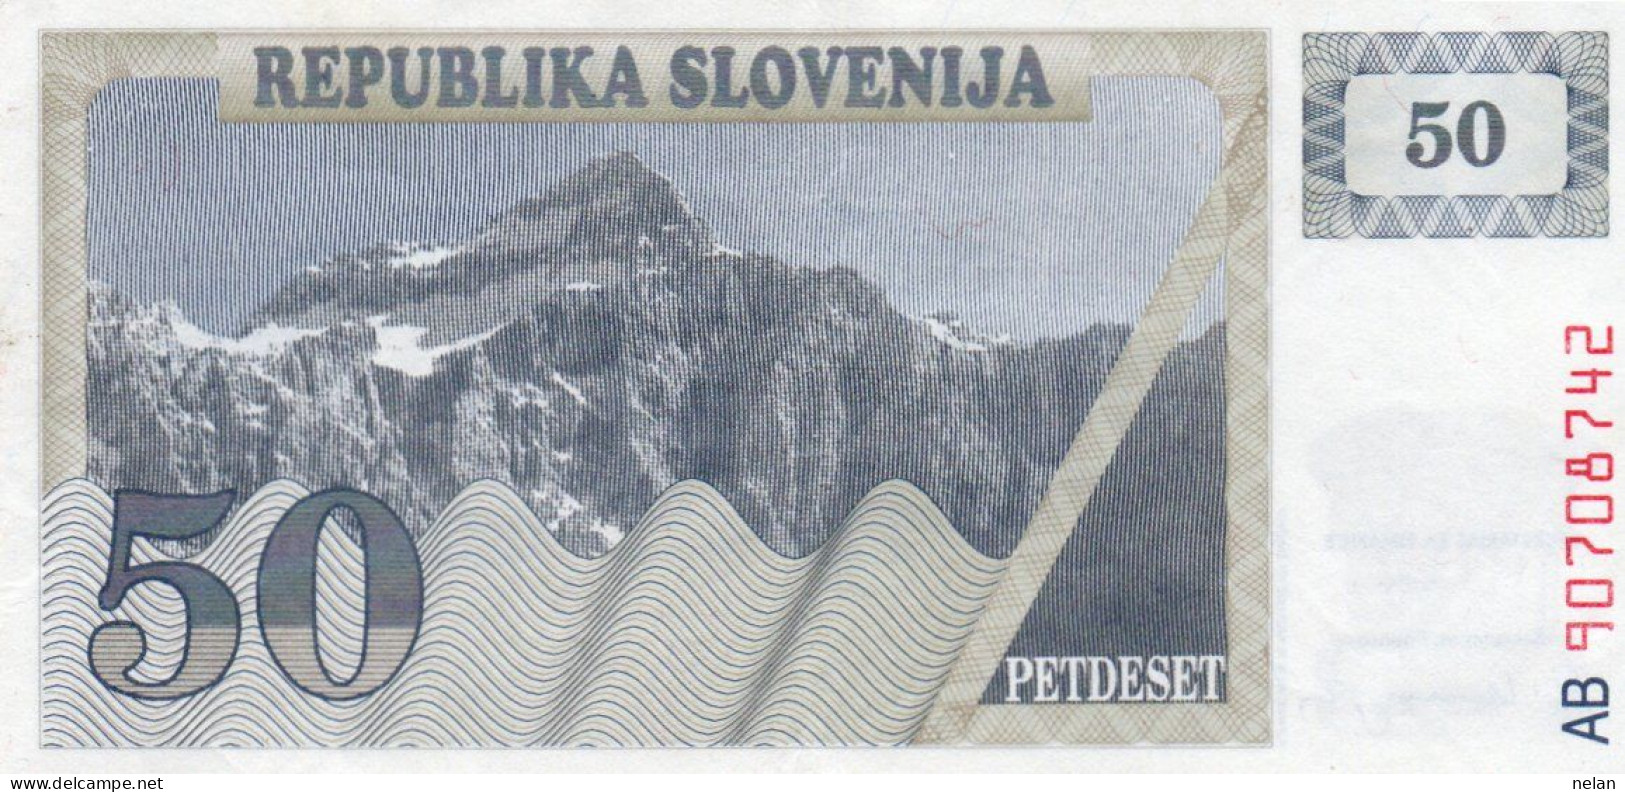 SLOVENIA 50 TOLARJEV 1990 P-5a  XF PREFIX AB - Slovenia